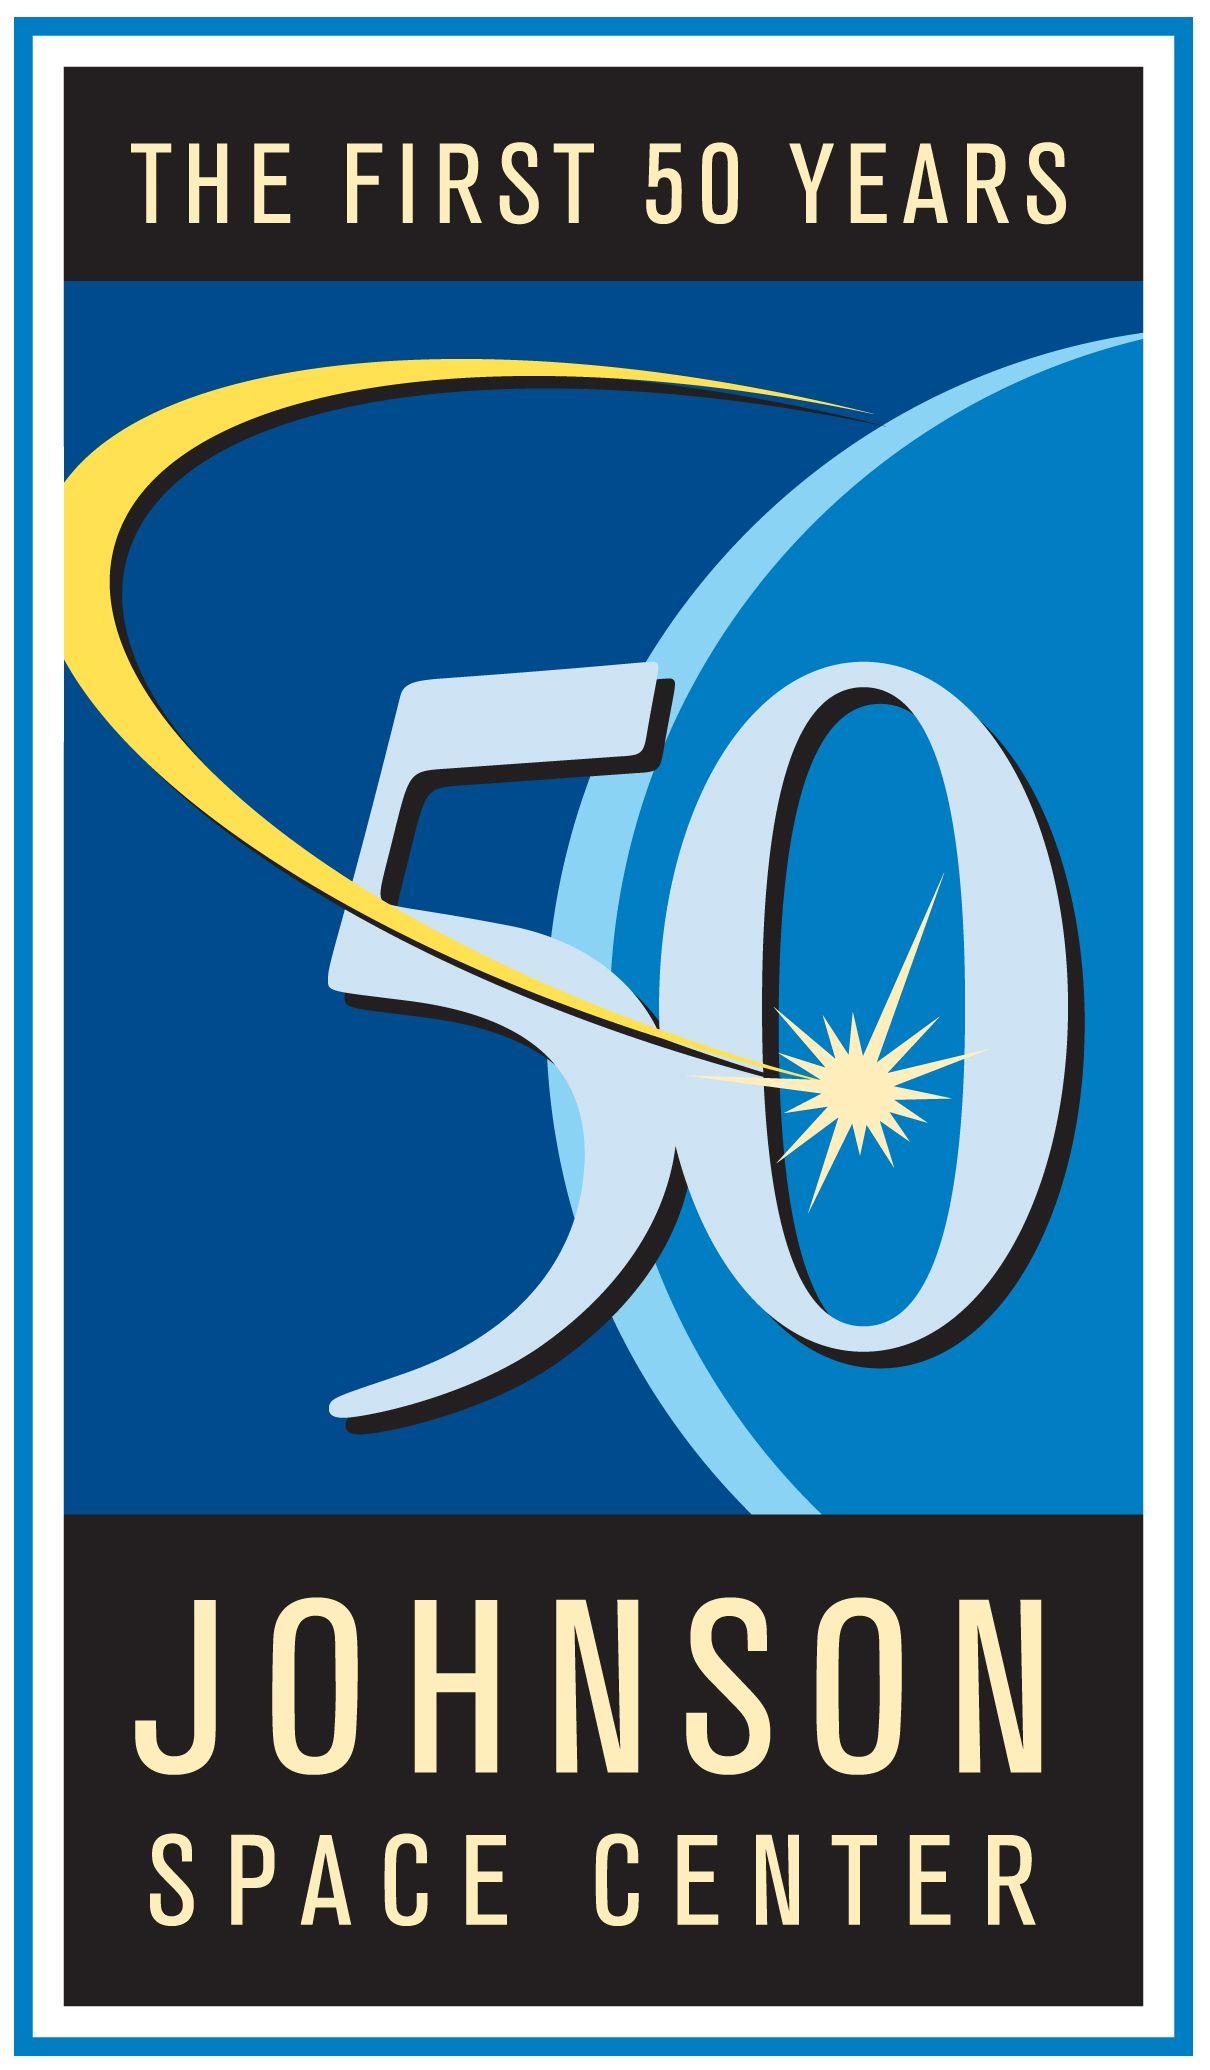 NASA Space Center Houston Logo - NASA - Johnson Space Center 50th Anniversary - Sept. 19, 2011